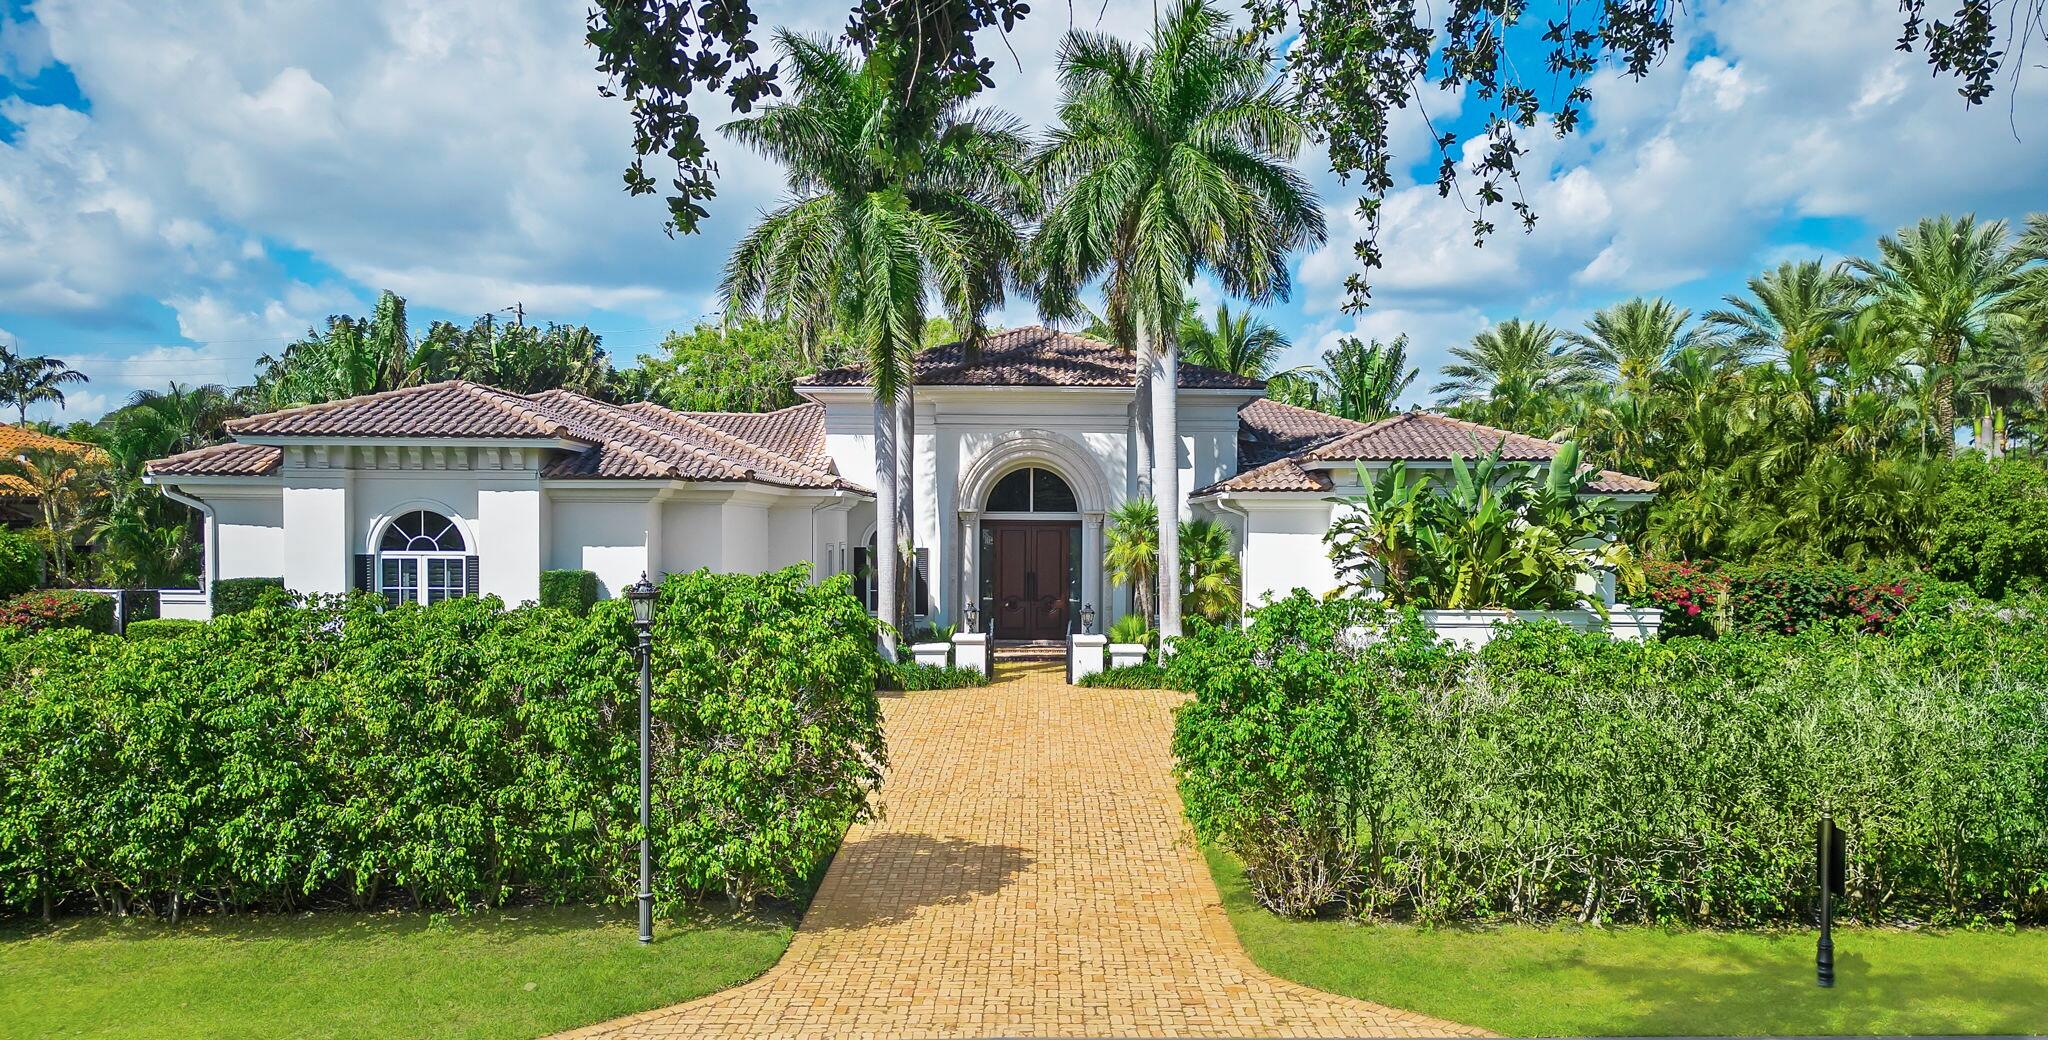 Property for Sale at 4499 Sanctuary Lane, Boca Raton, Palm Beach County, Florida - Bedrooms: 4 
Bathrooms: 4.5  - $5,900,000